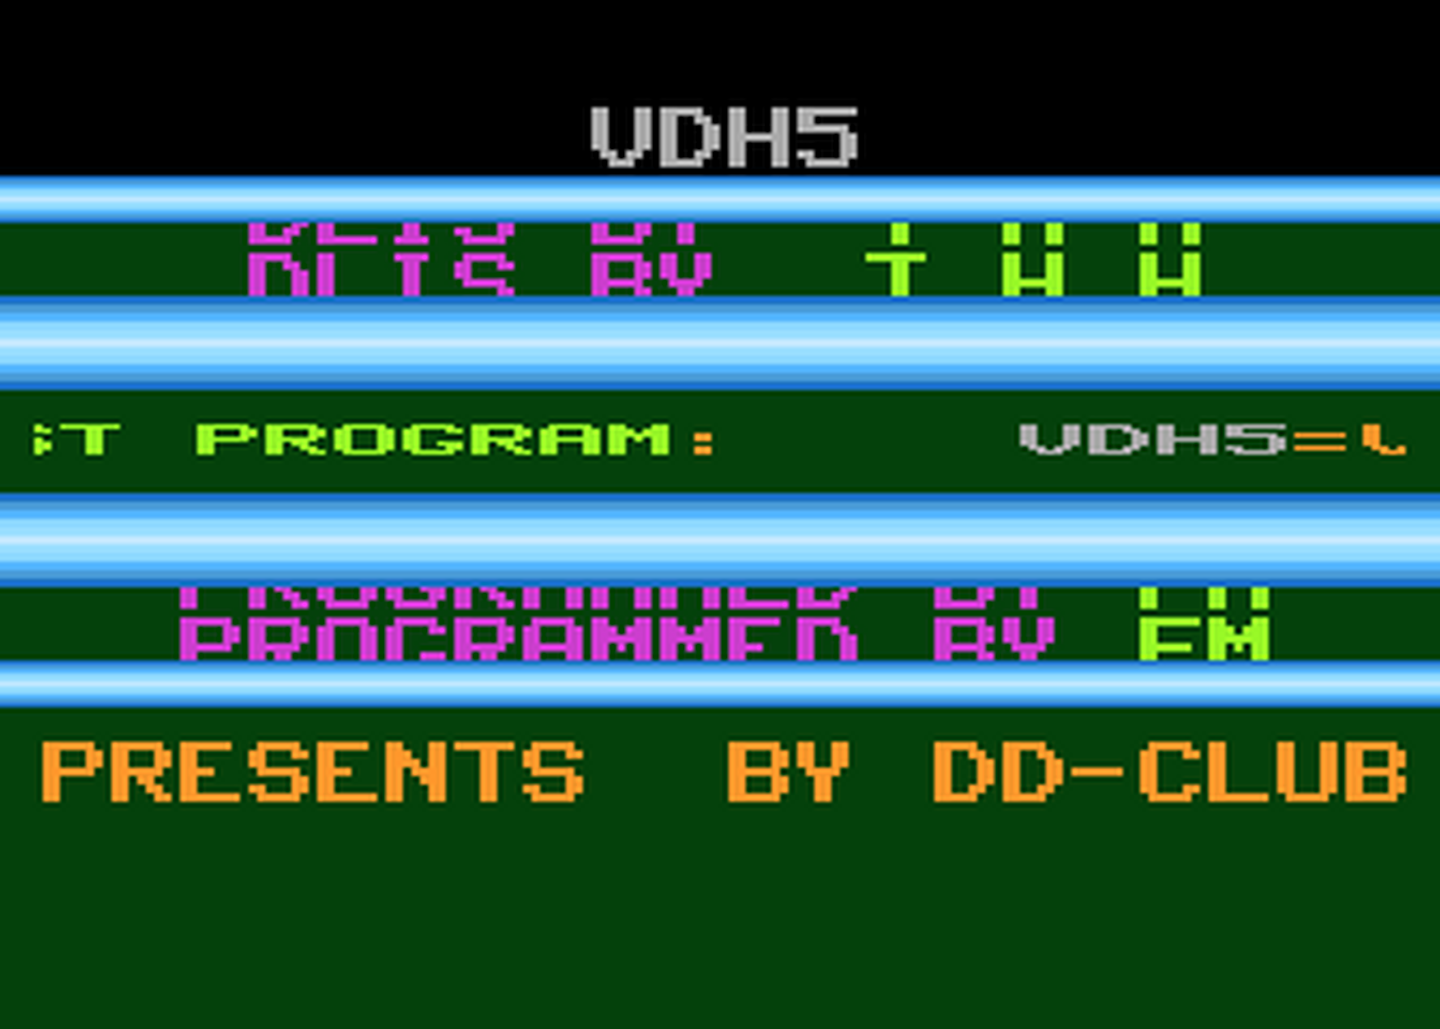 Atari GameBase VDH5 DD-Club 1992